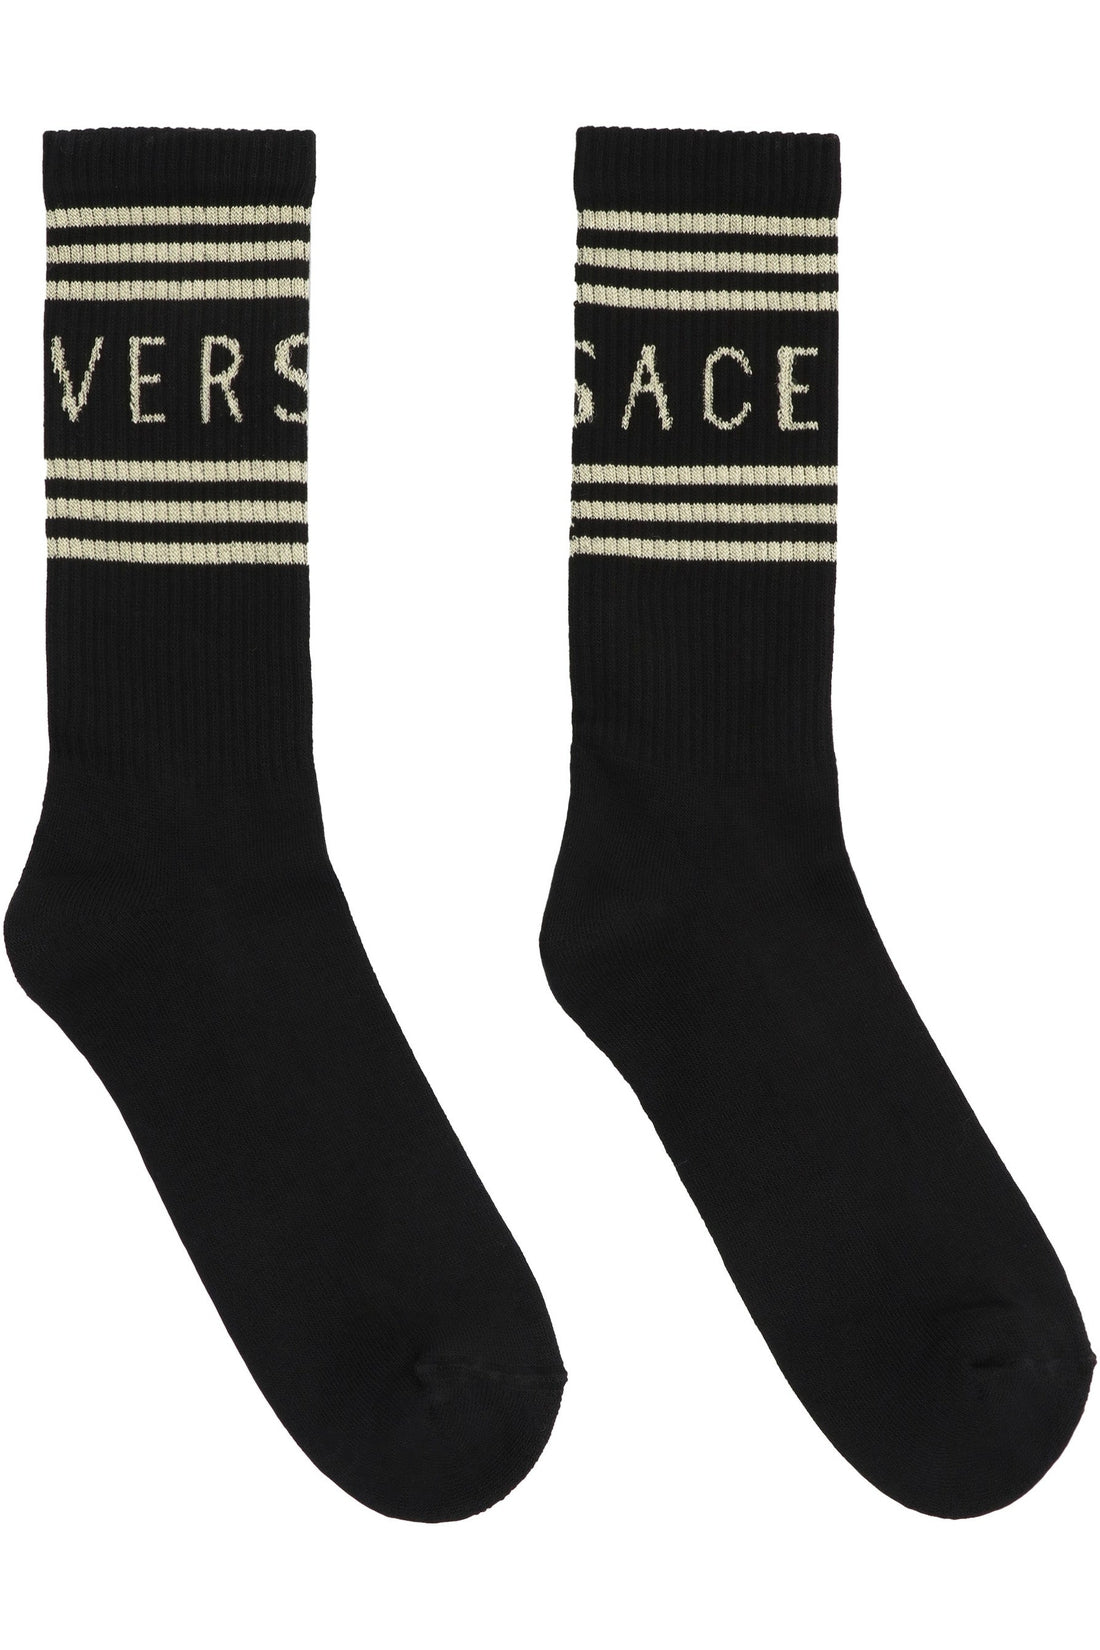 Versace-OUTLET-SALE-Cotton socks with logo-ARCHIVIST